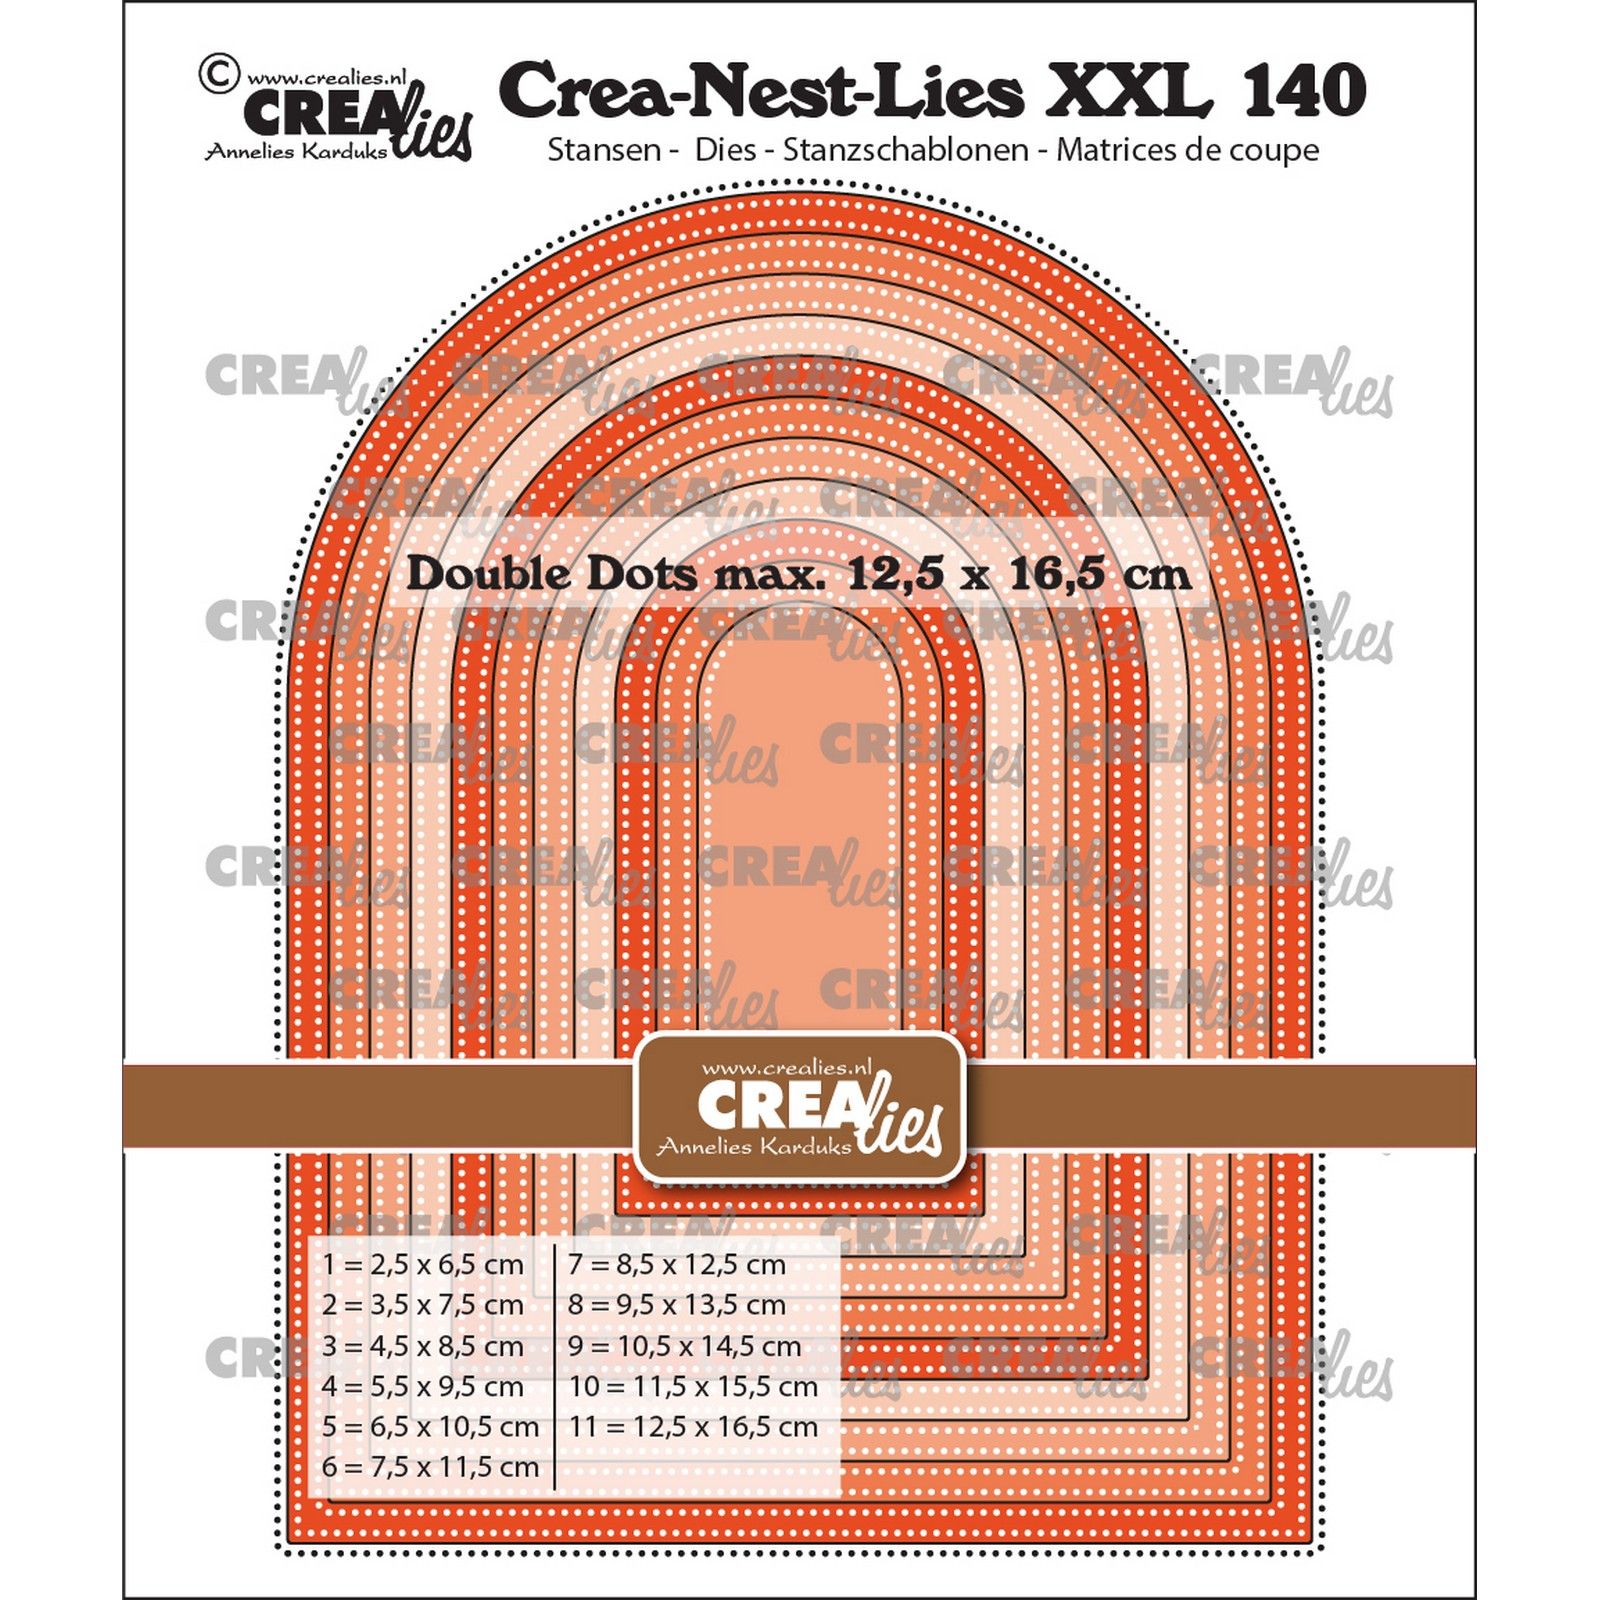 Crealies • Crea-Nest-Lies XXL High Arch with double dots